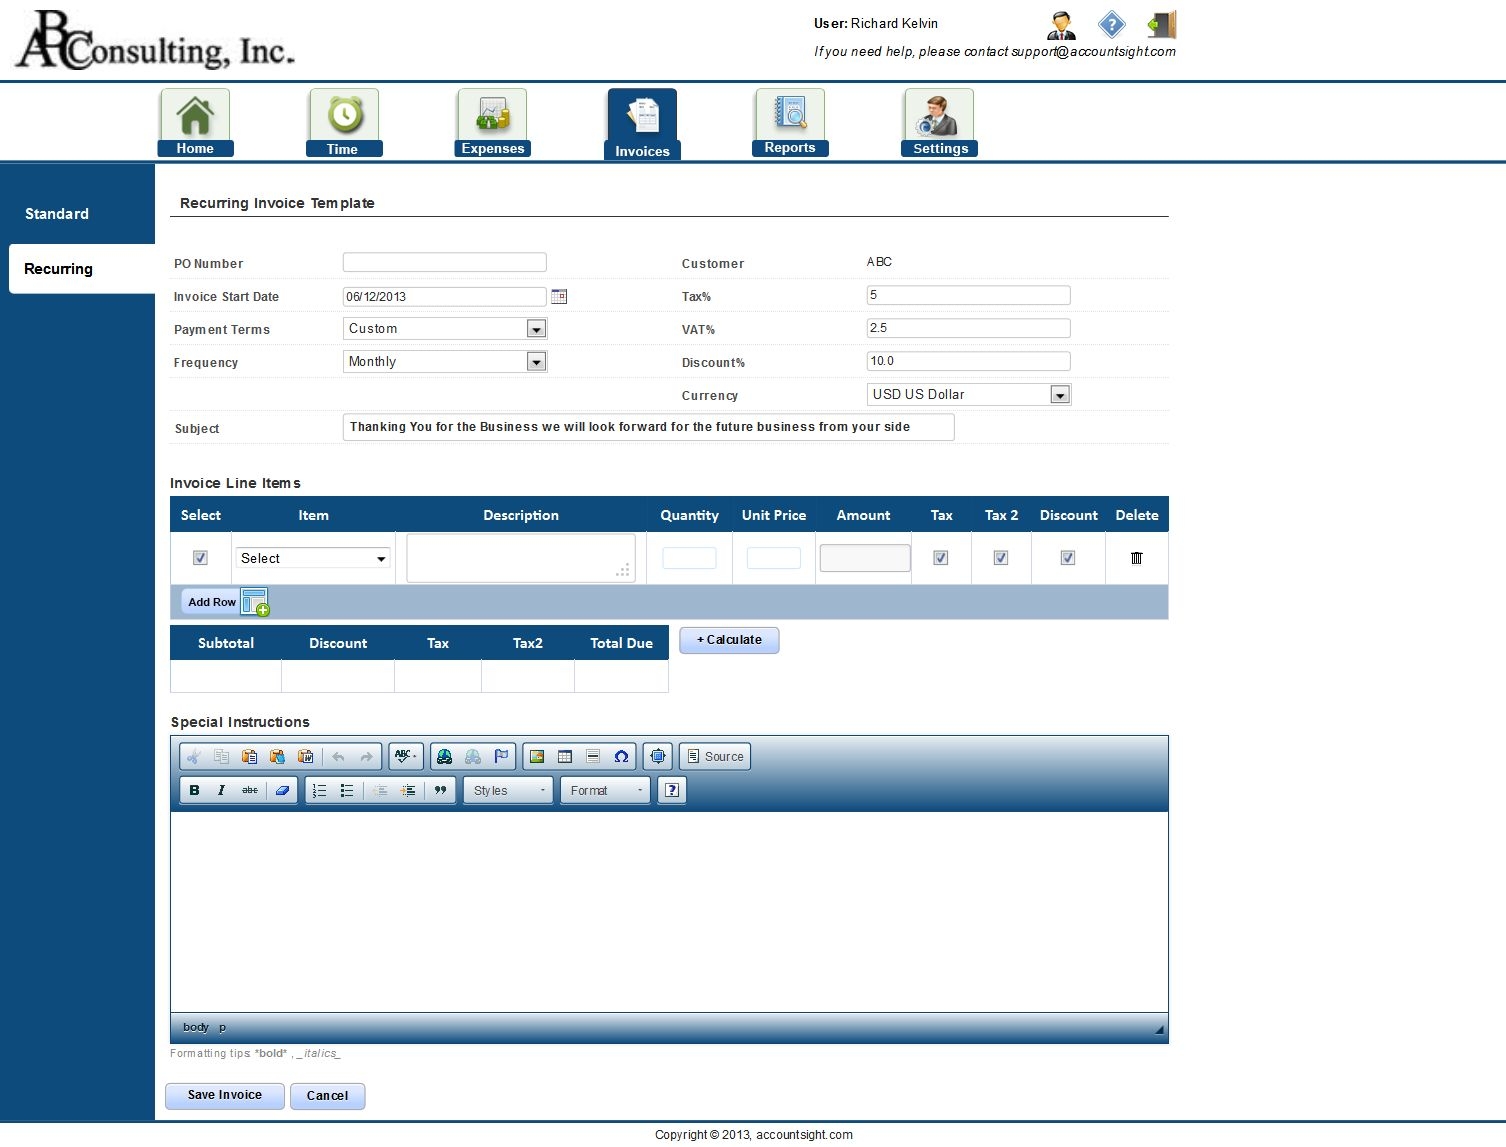 invoice generation software accountsight online invoice tracking software recurring invoices 1506 X 1147